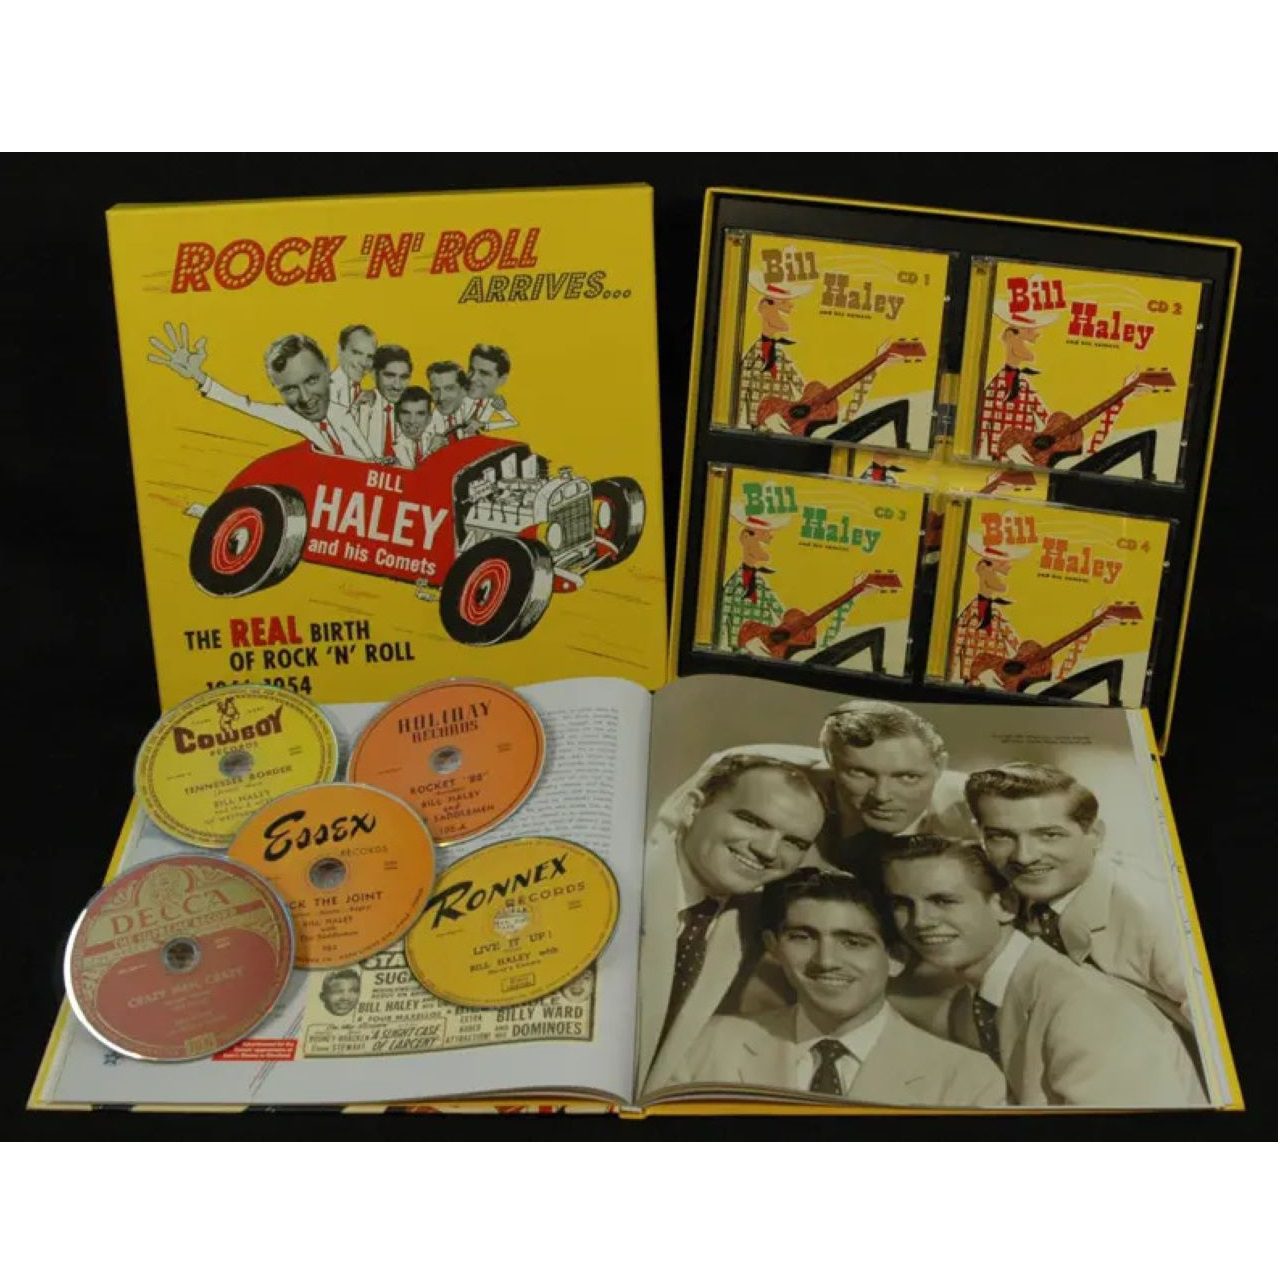 Bill Haley - Rock'n'roll Arrives cover album